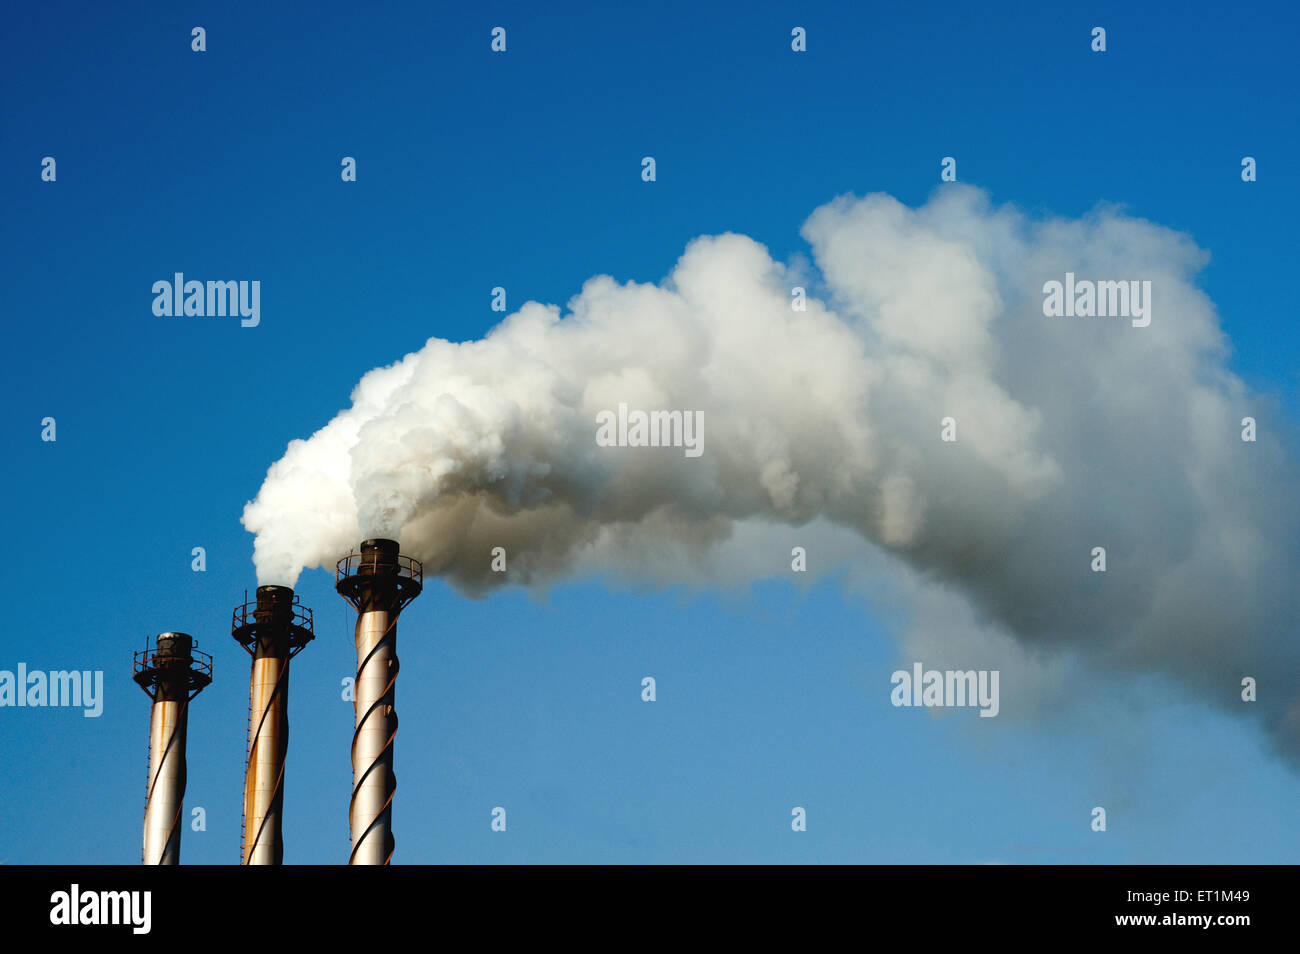 Industrial chimney smoke pollution Stock Photo